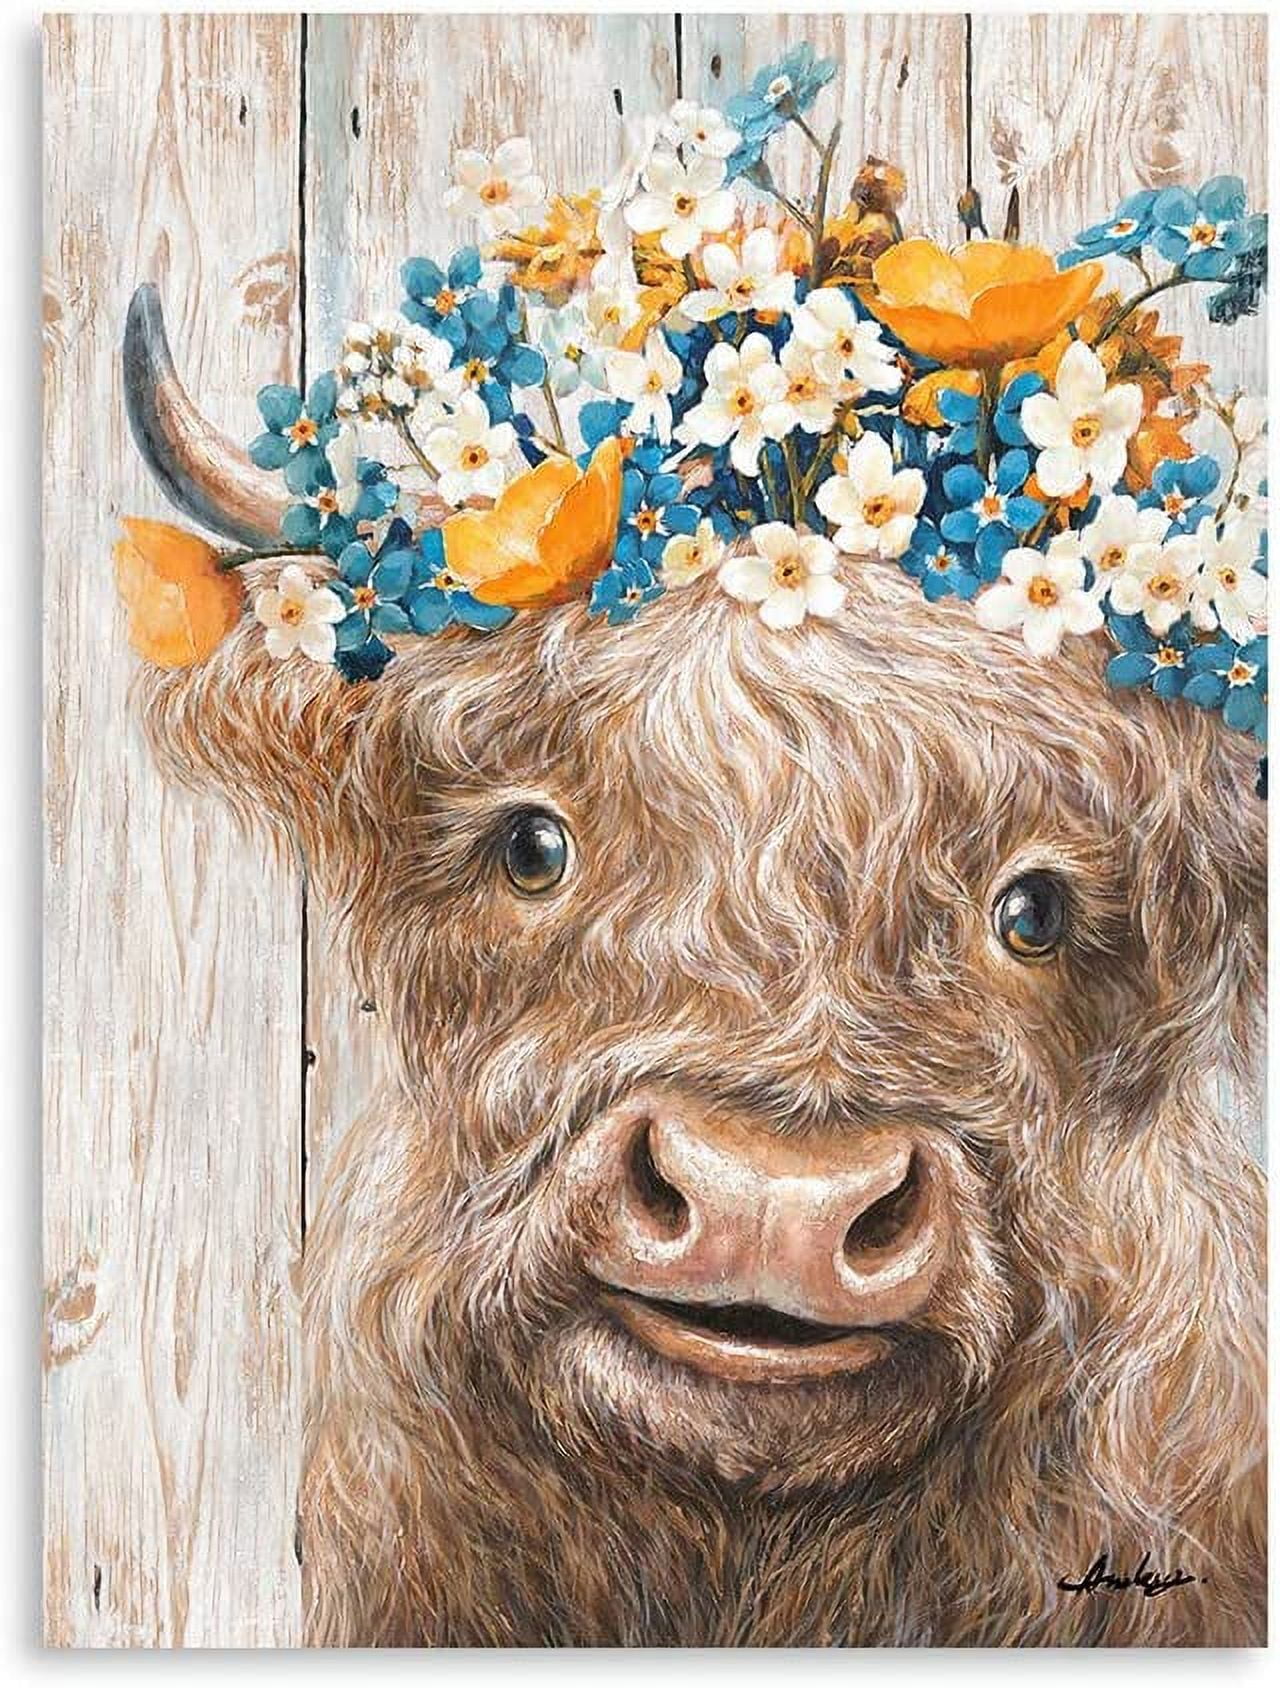 Cowhide Mural, Cow Print Wallpaper for Walls